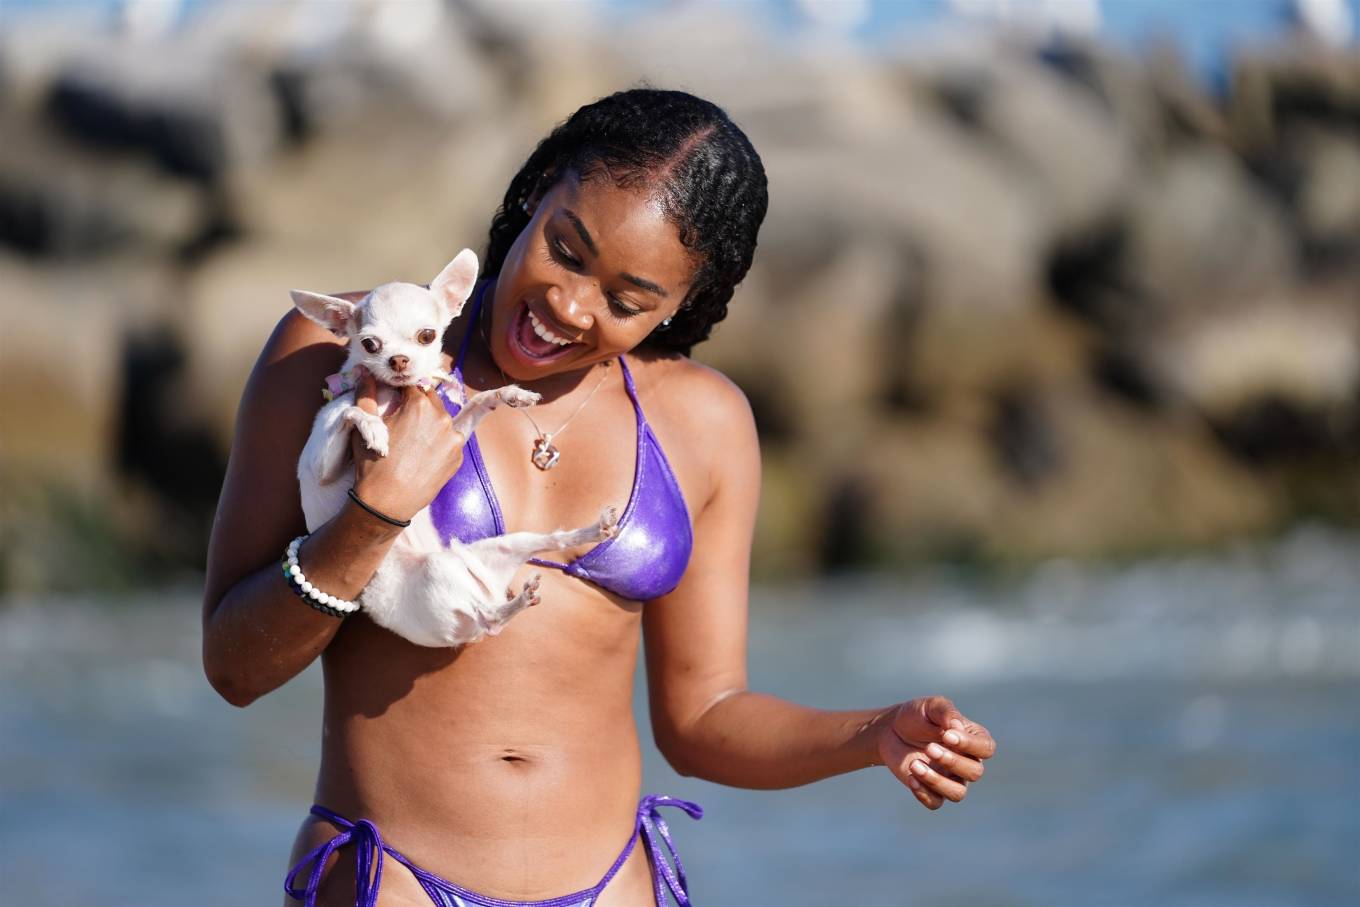 Ariane Andrew in Purple Bikini - Taking her dog to a beach in Santa Monica....